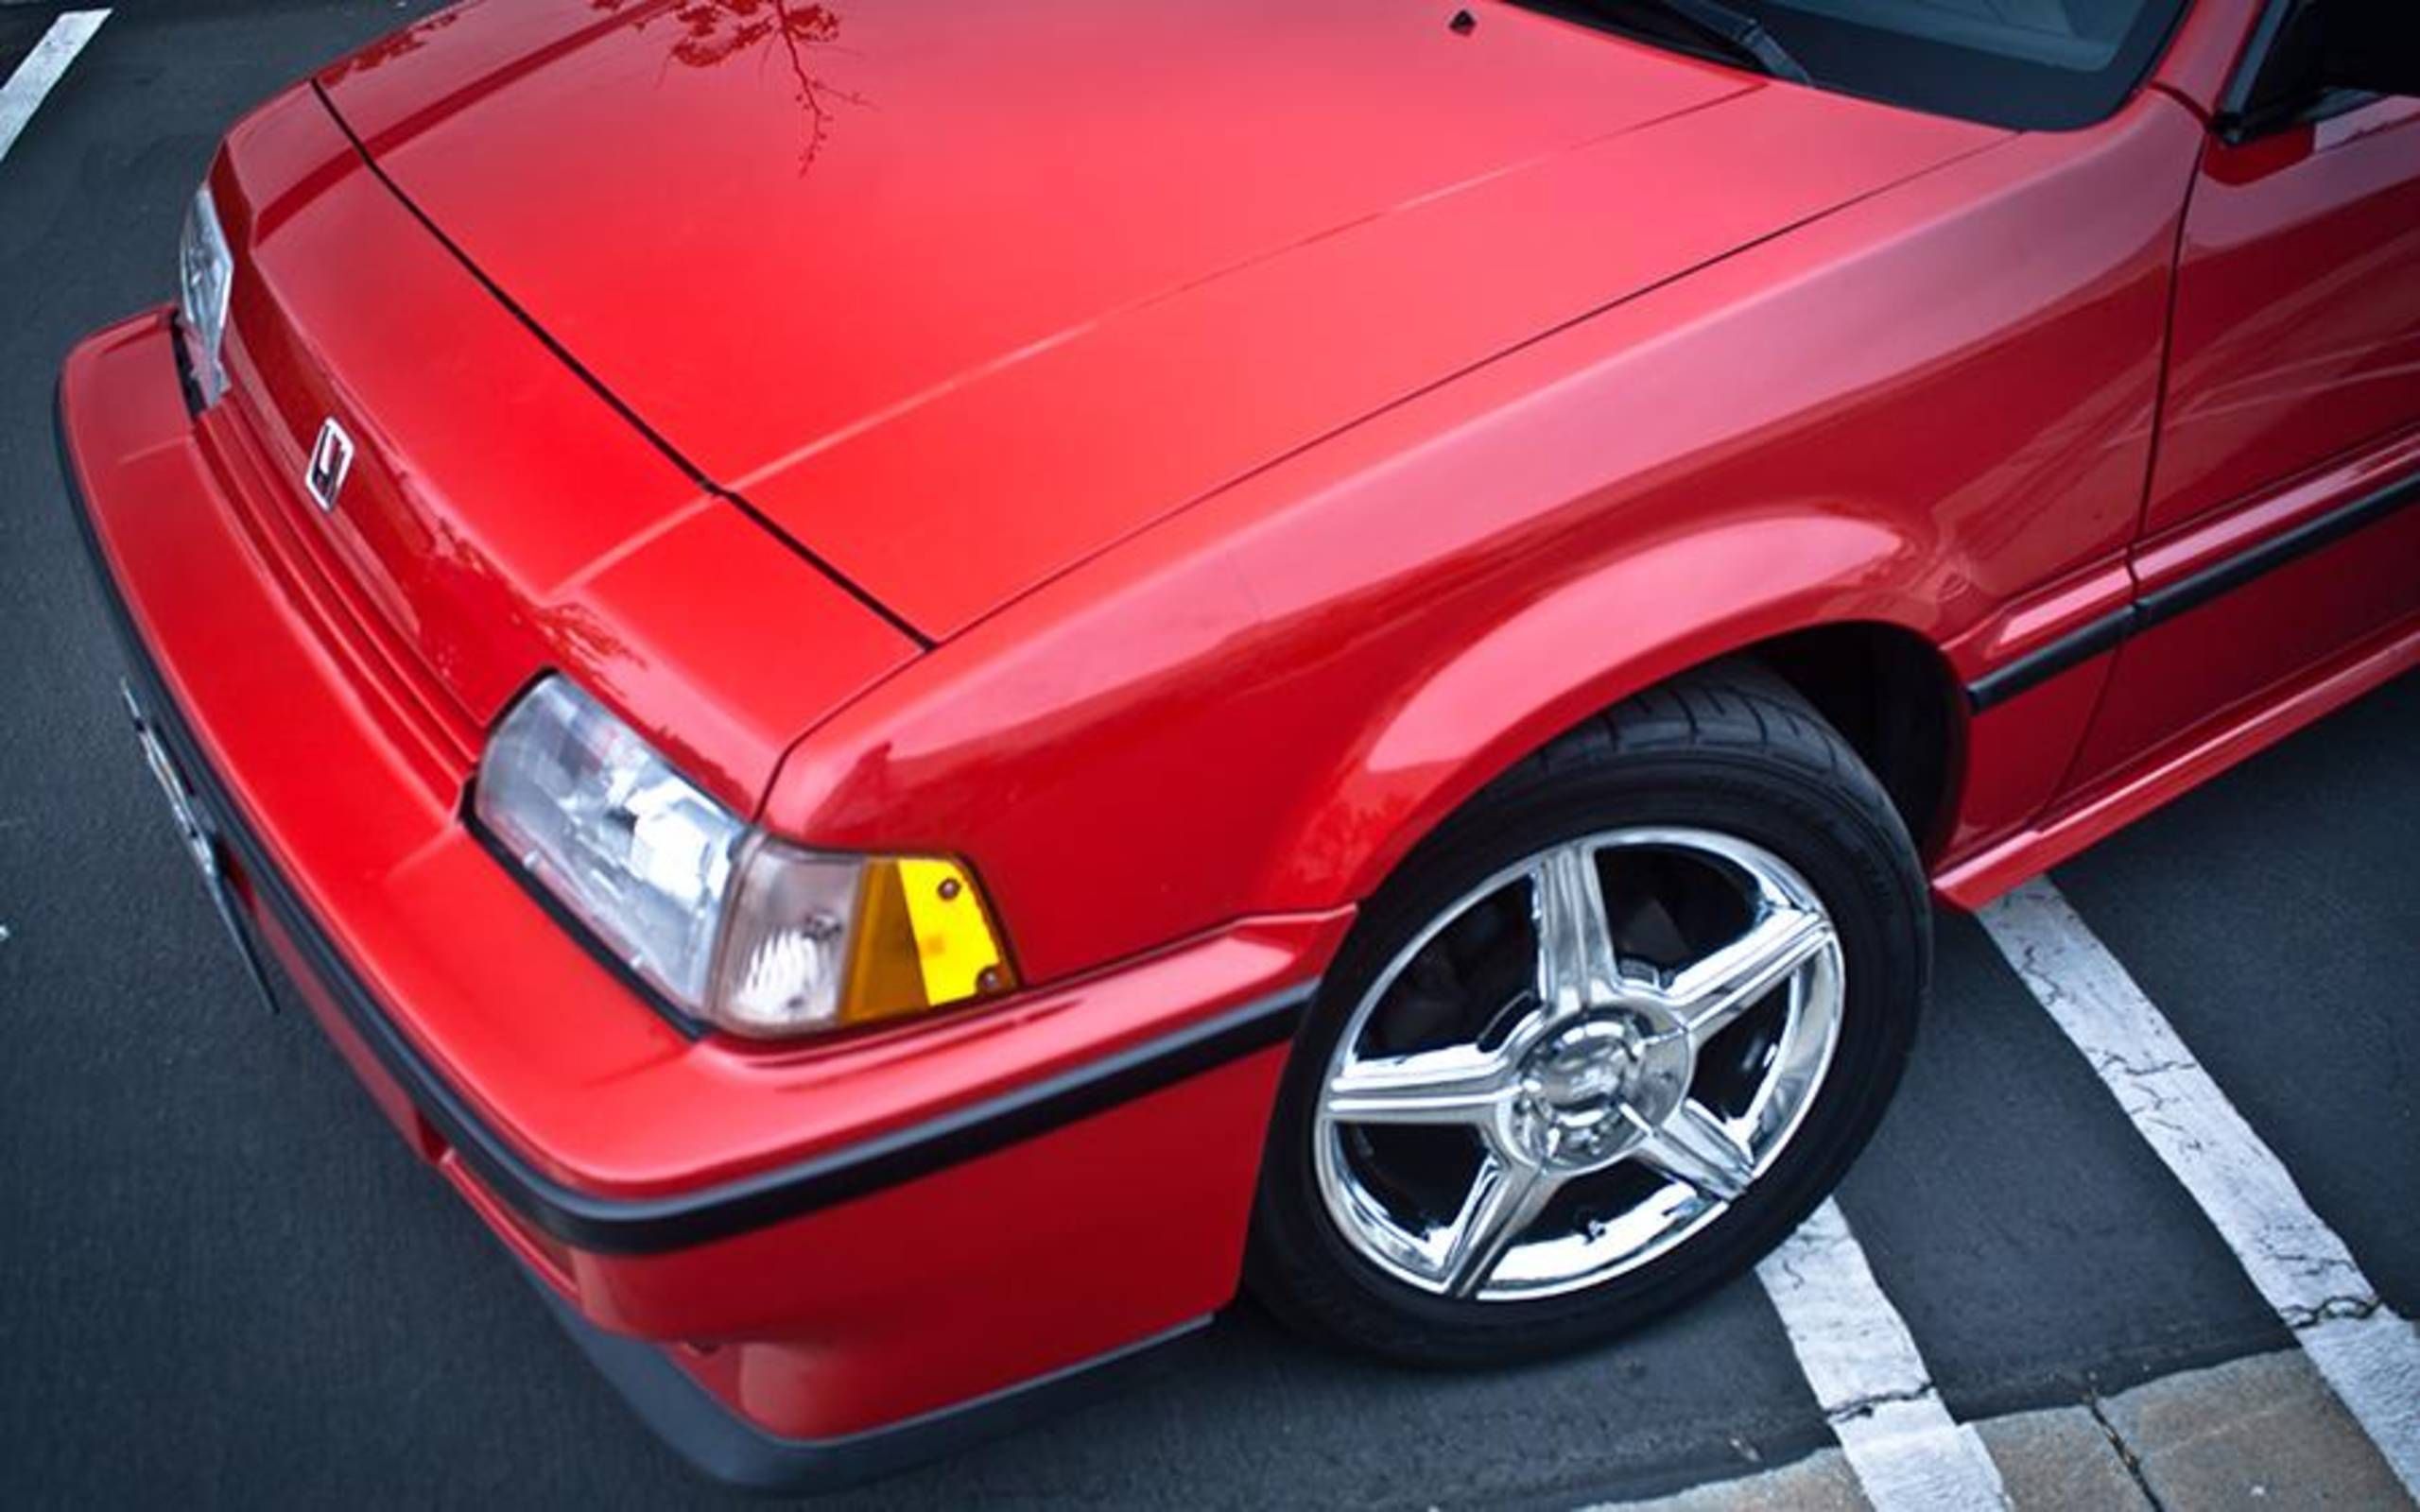 1987 Honda CRX Si drive review